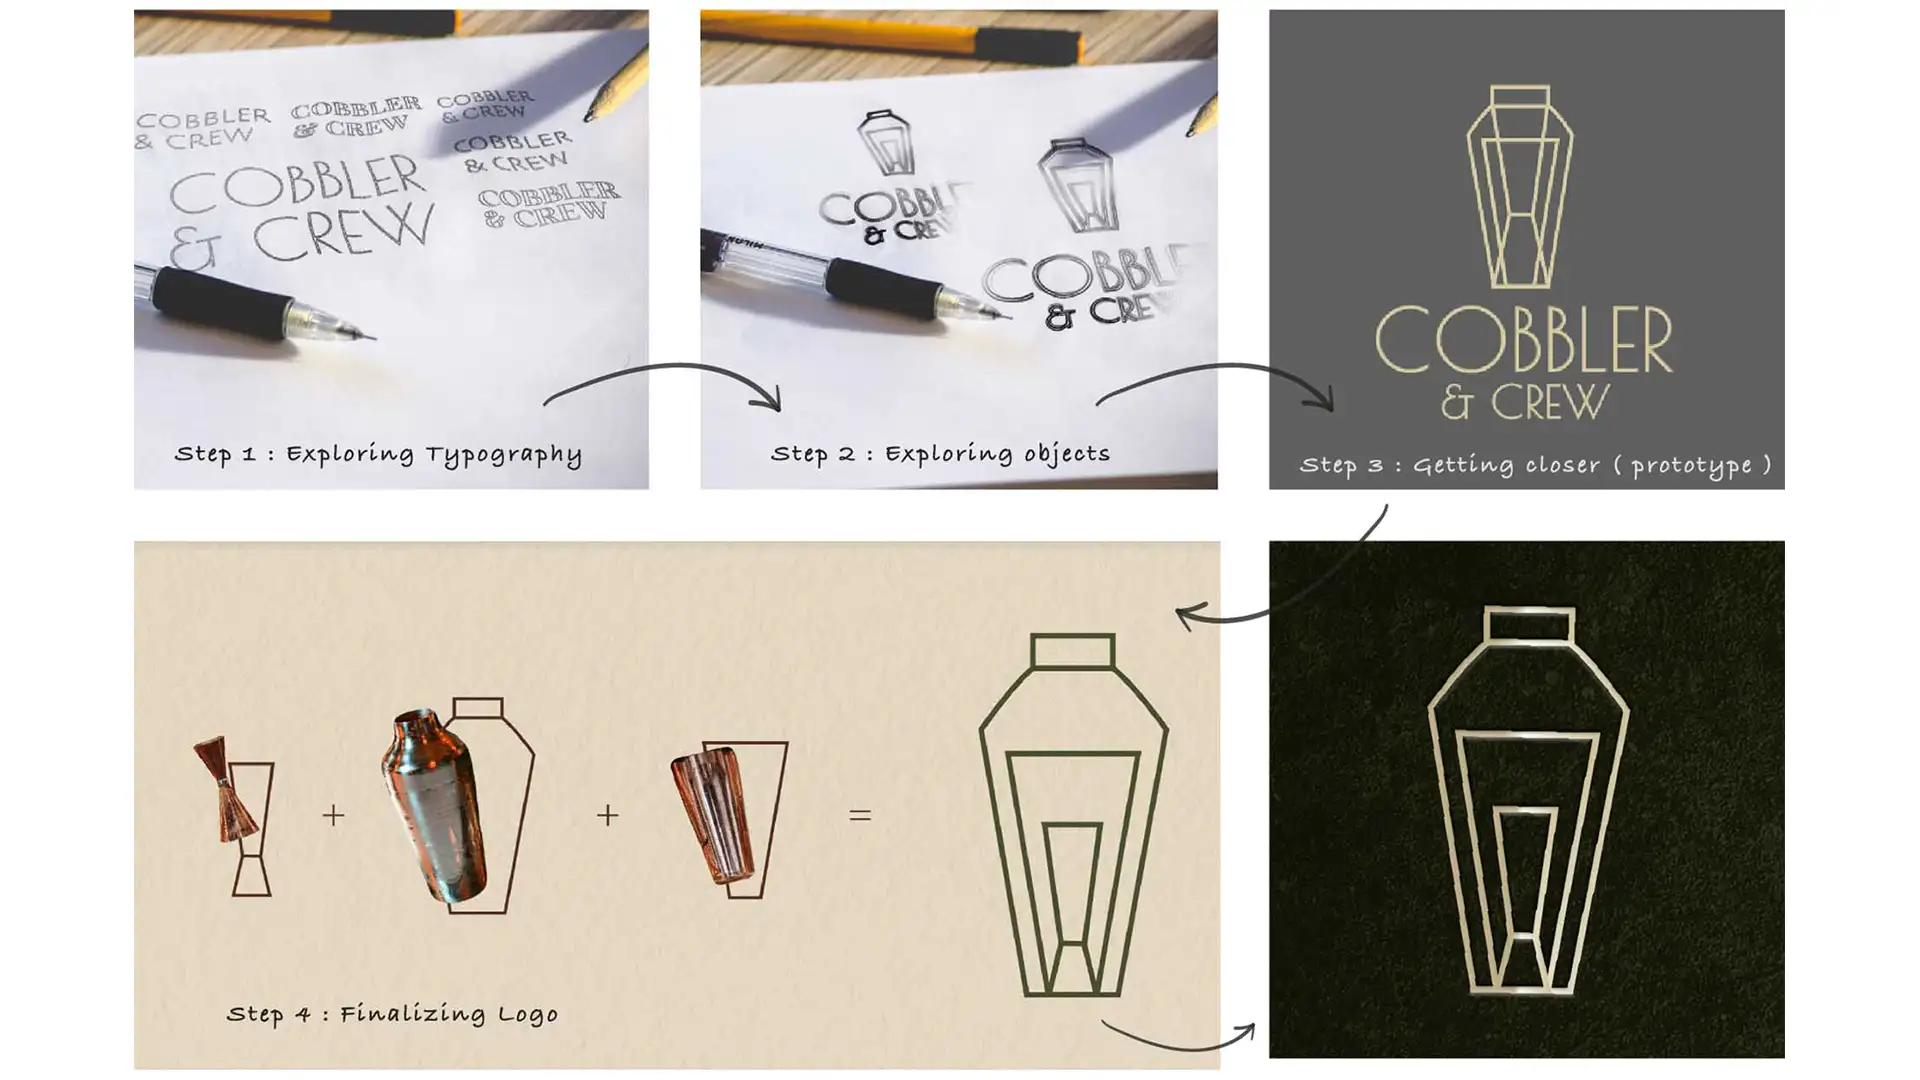 Conceptual sketch showcasing the design of the Cobbler and Crew logo.